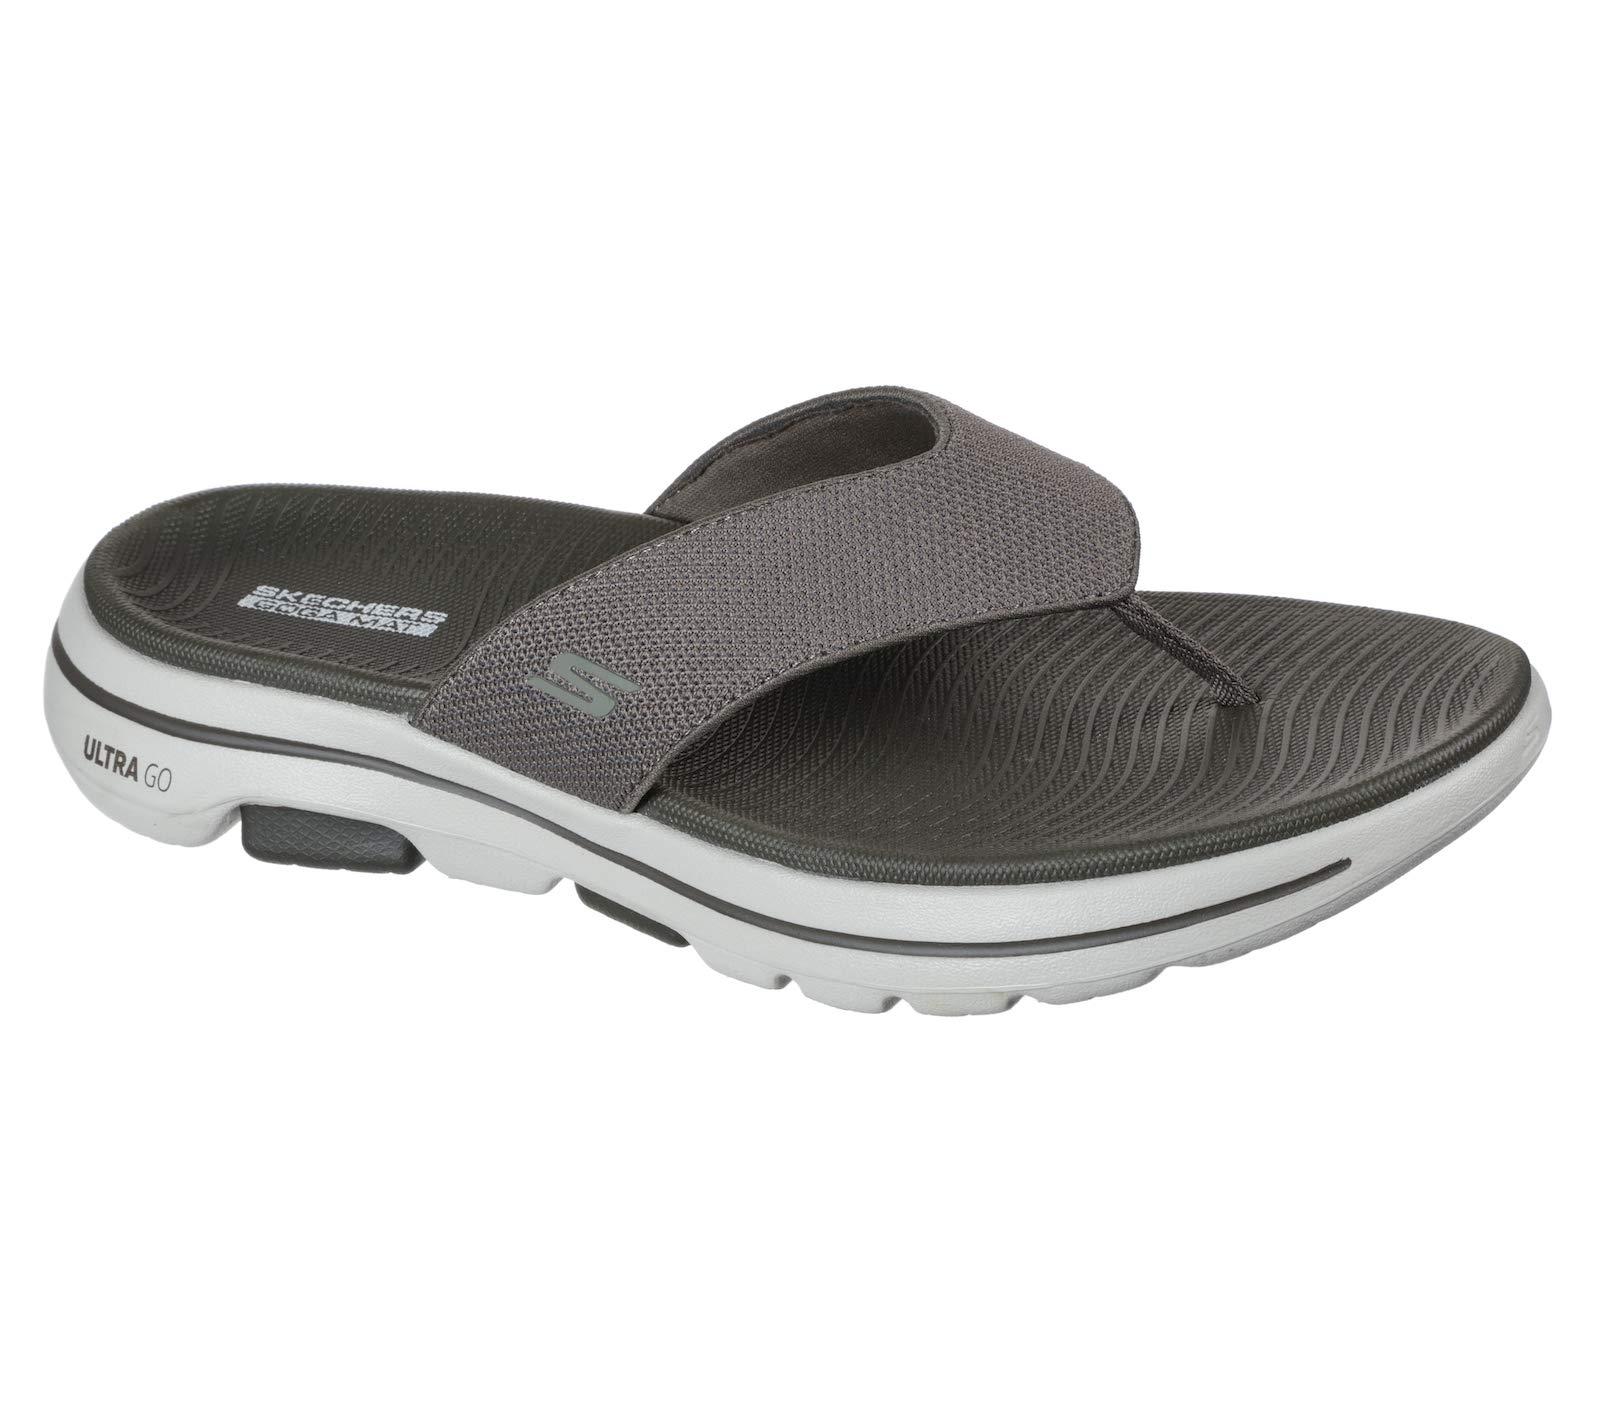 Skechers Gowalk 5-performance Walking Flip-flop Sandal for Men - Save 45% |  Lyst